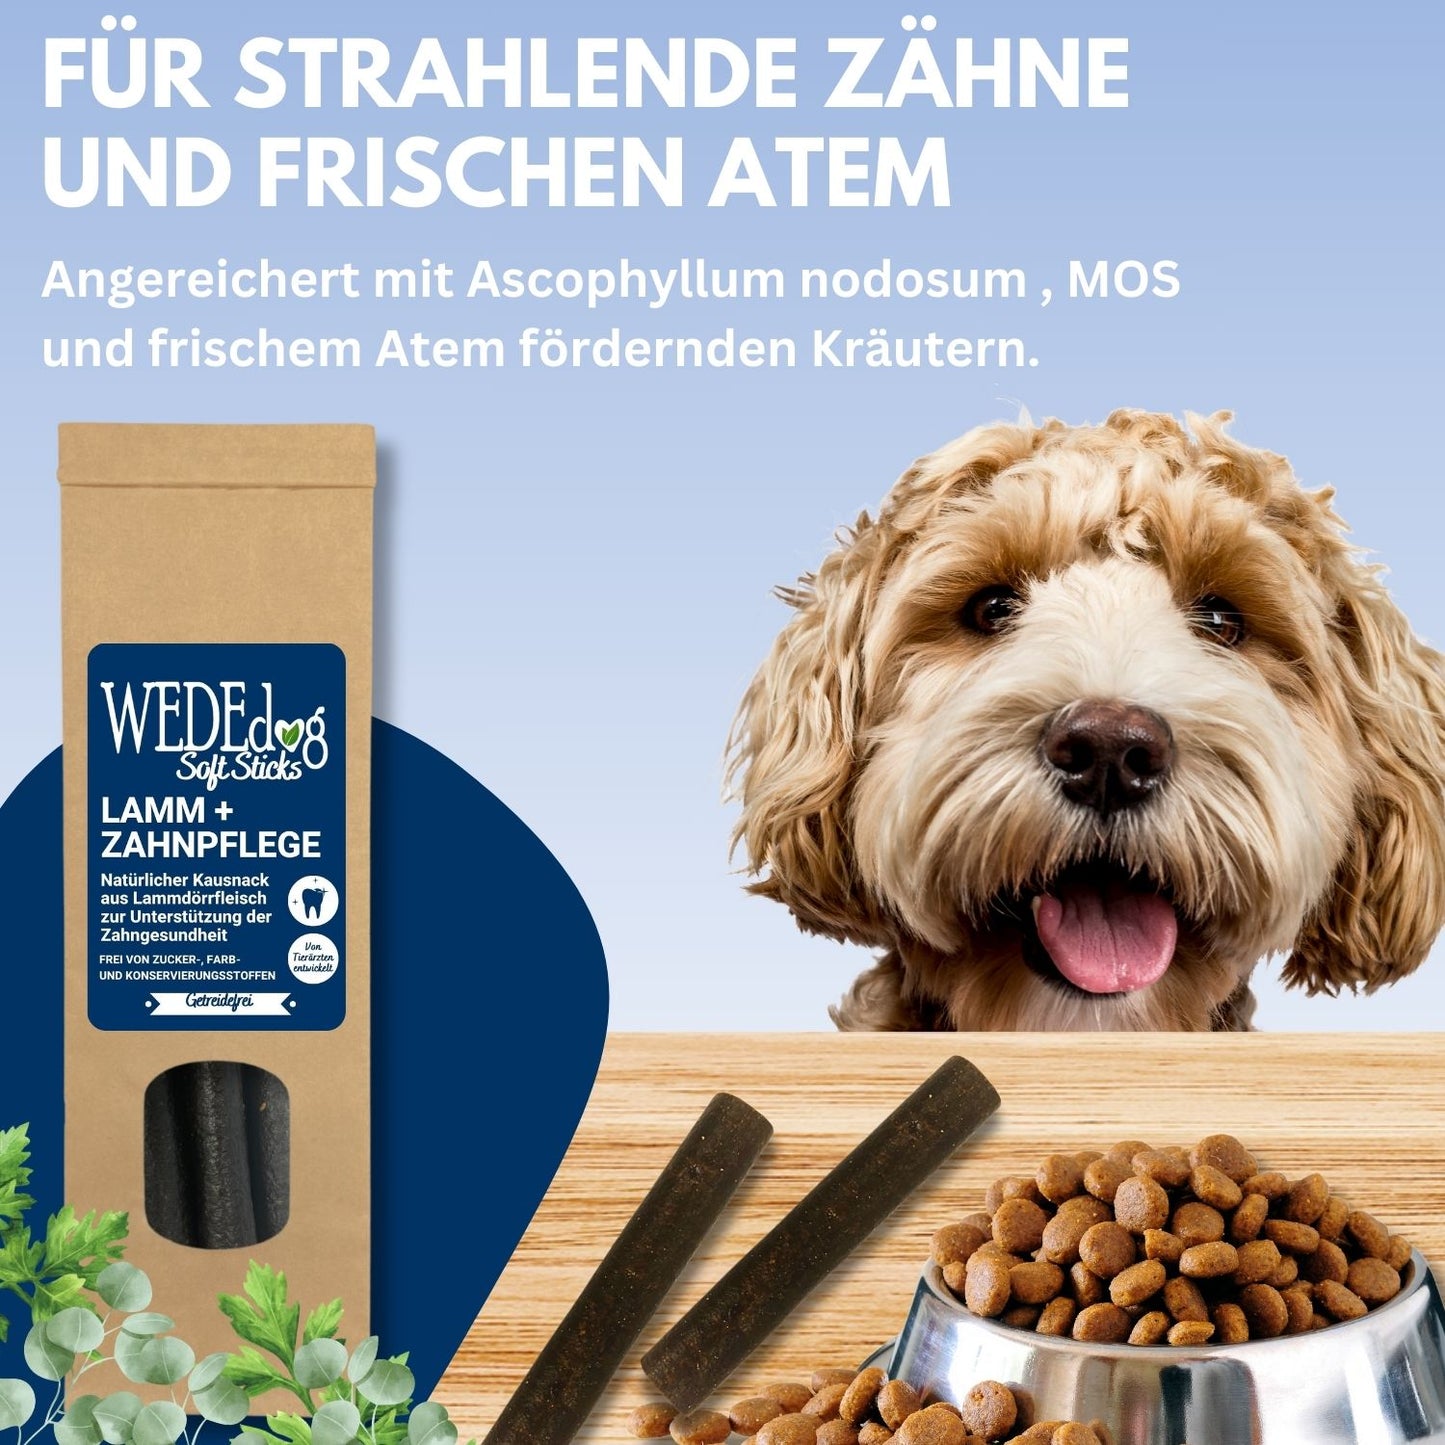 Natürliche Kausnacks für Hunde I Zahnpflege für Hunde I WEDEdog SOFT Sticks Lamm + Zahnpflege I Premium Kausticks für Hunde I 110g